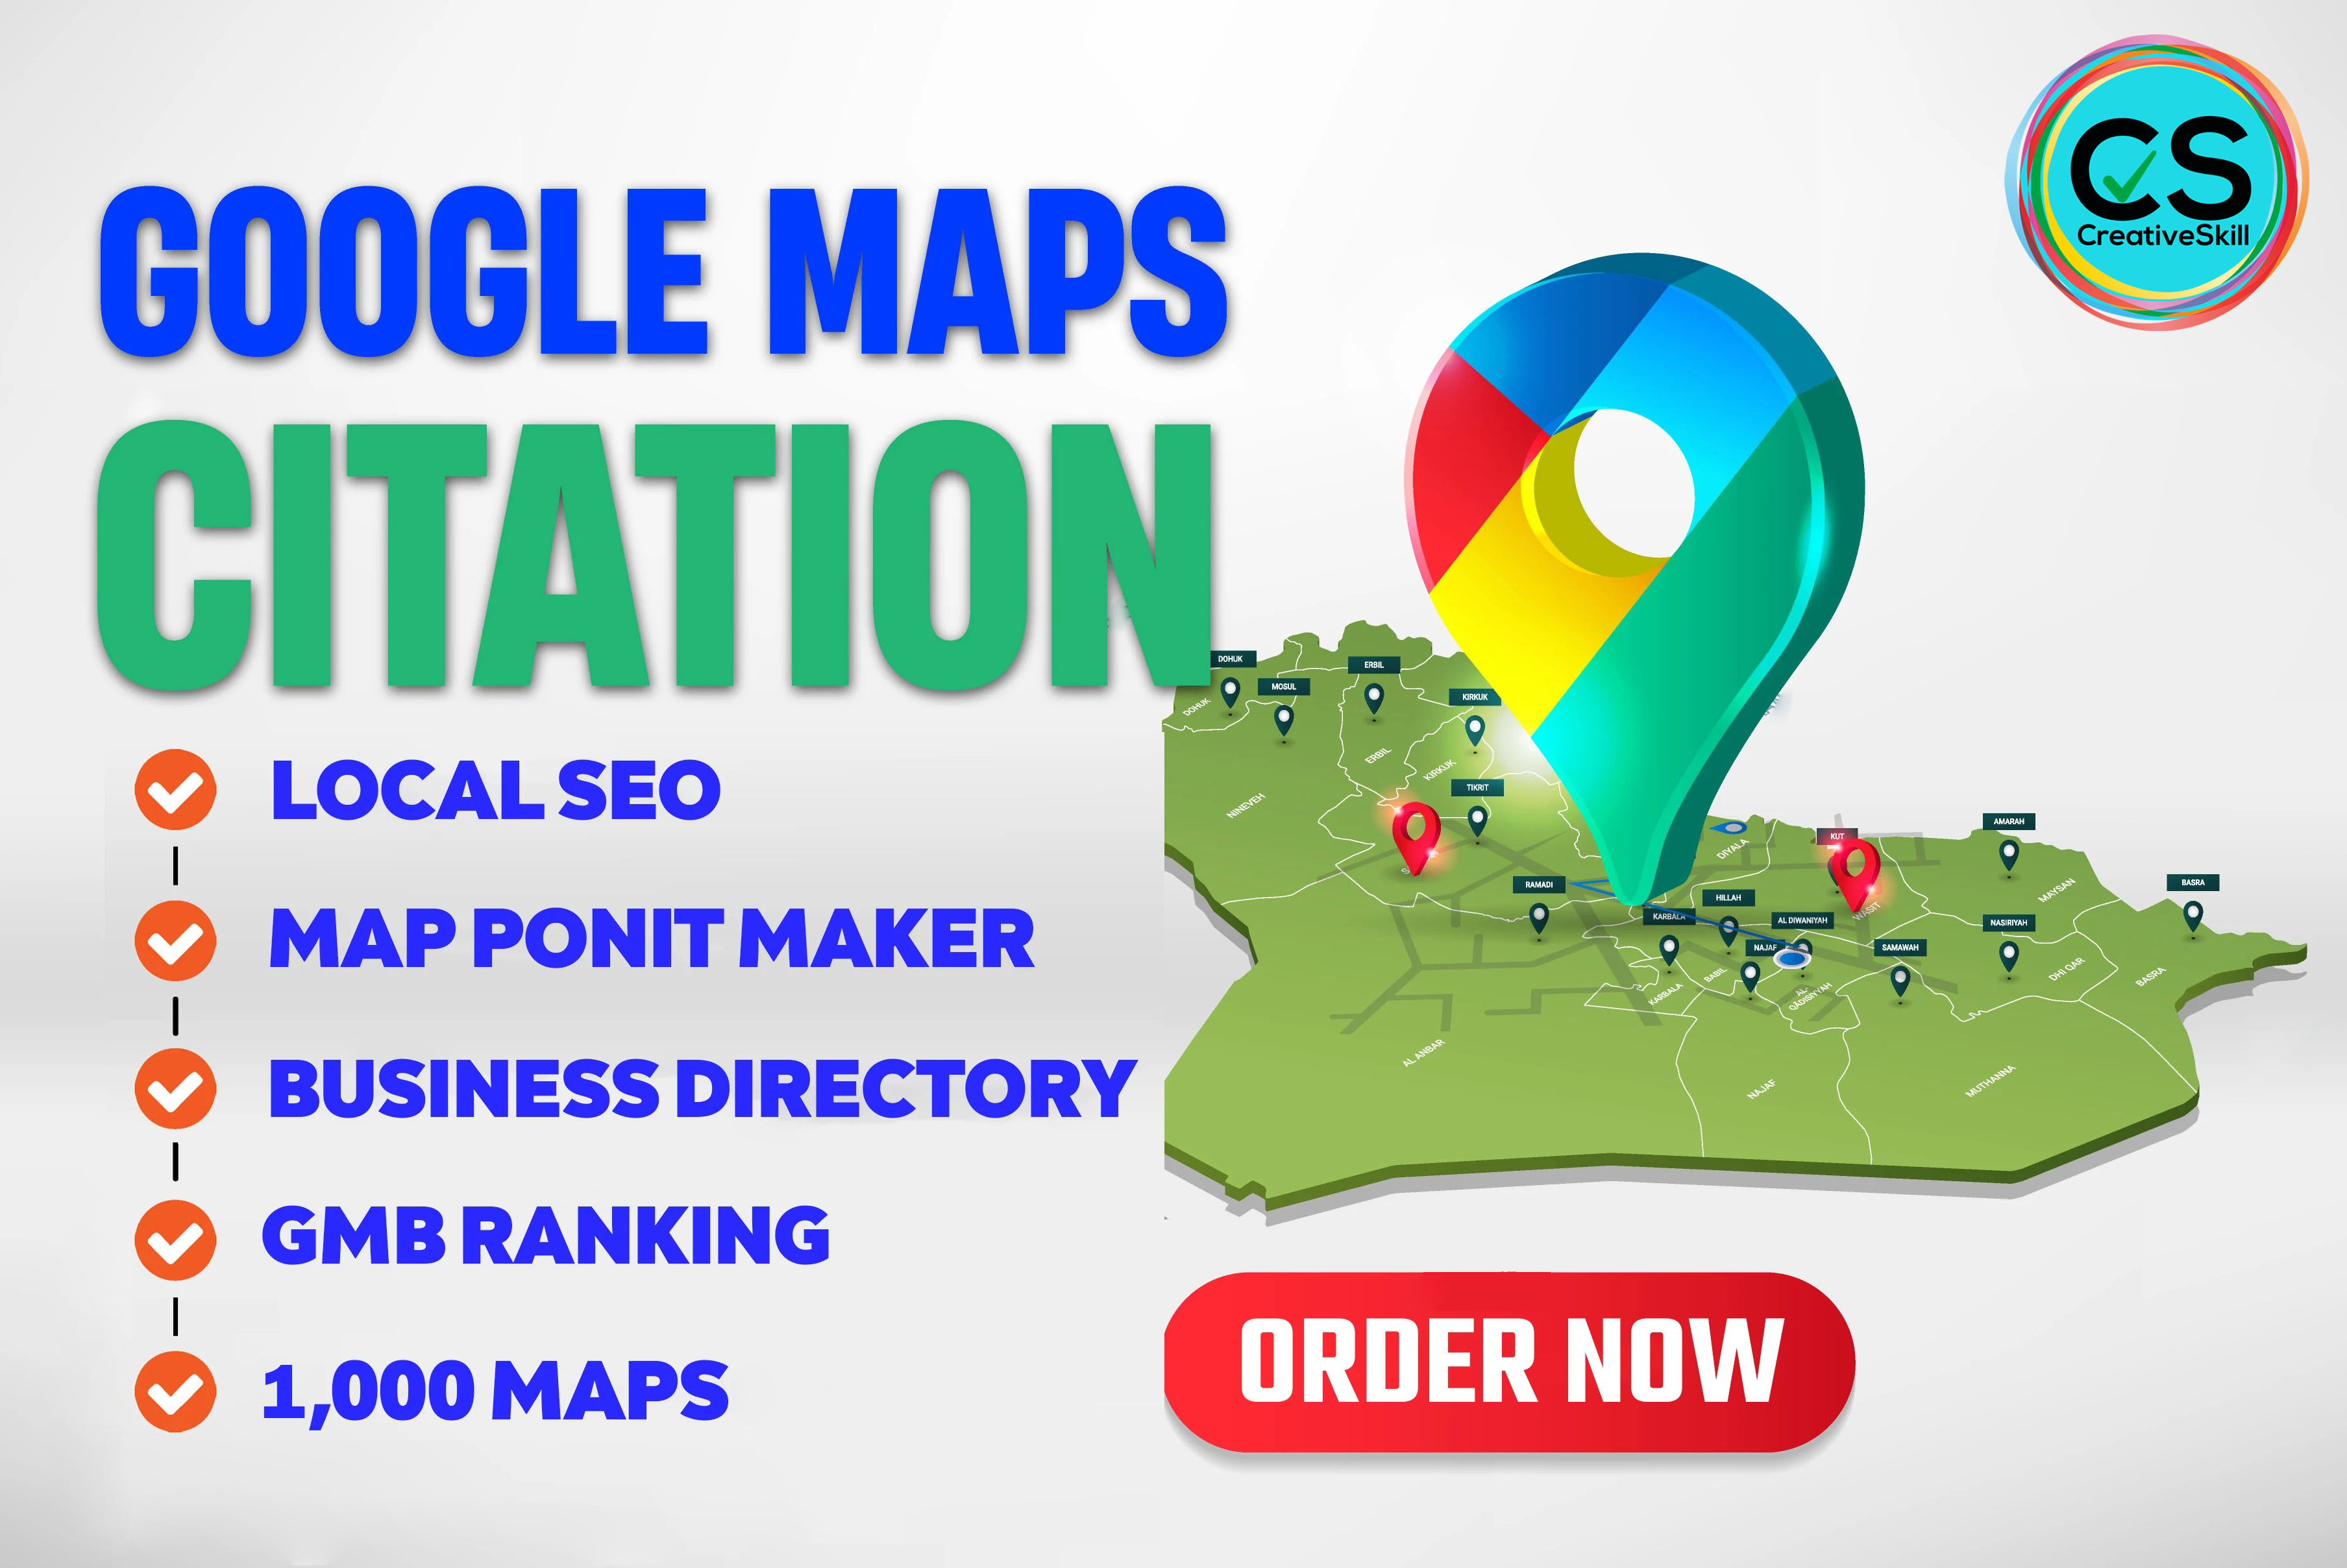 Get 1000+ Google Map Citations To Improve Local SEO & GMB Ranking